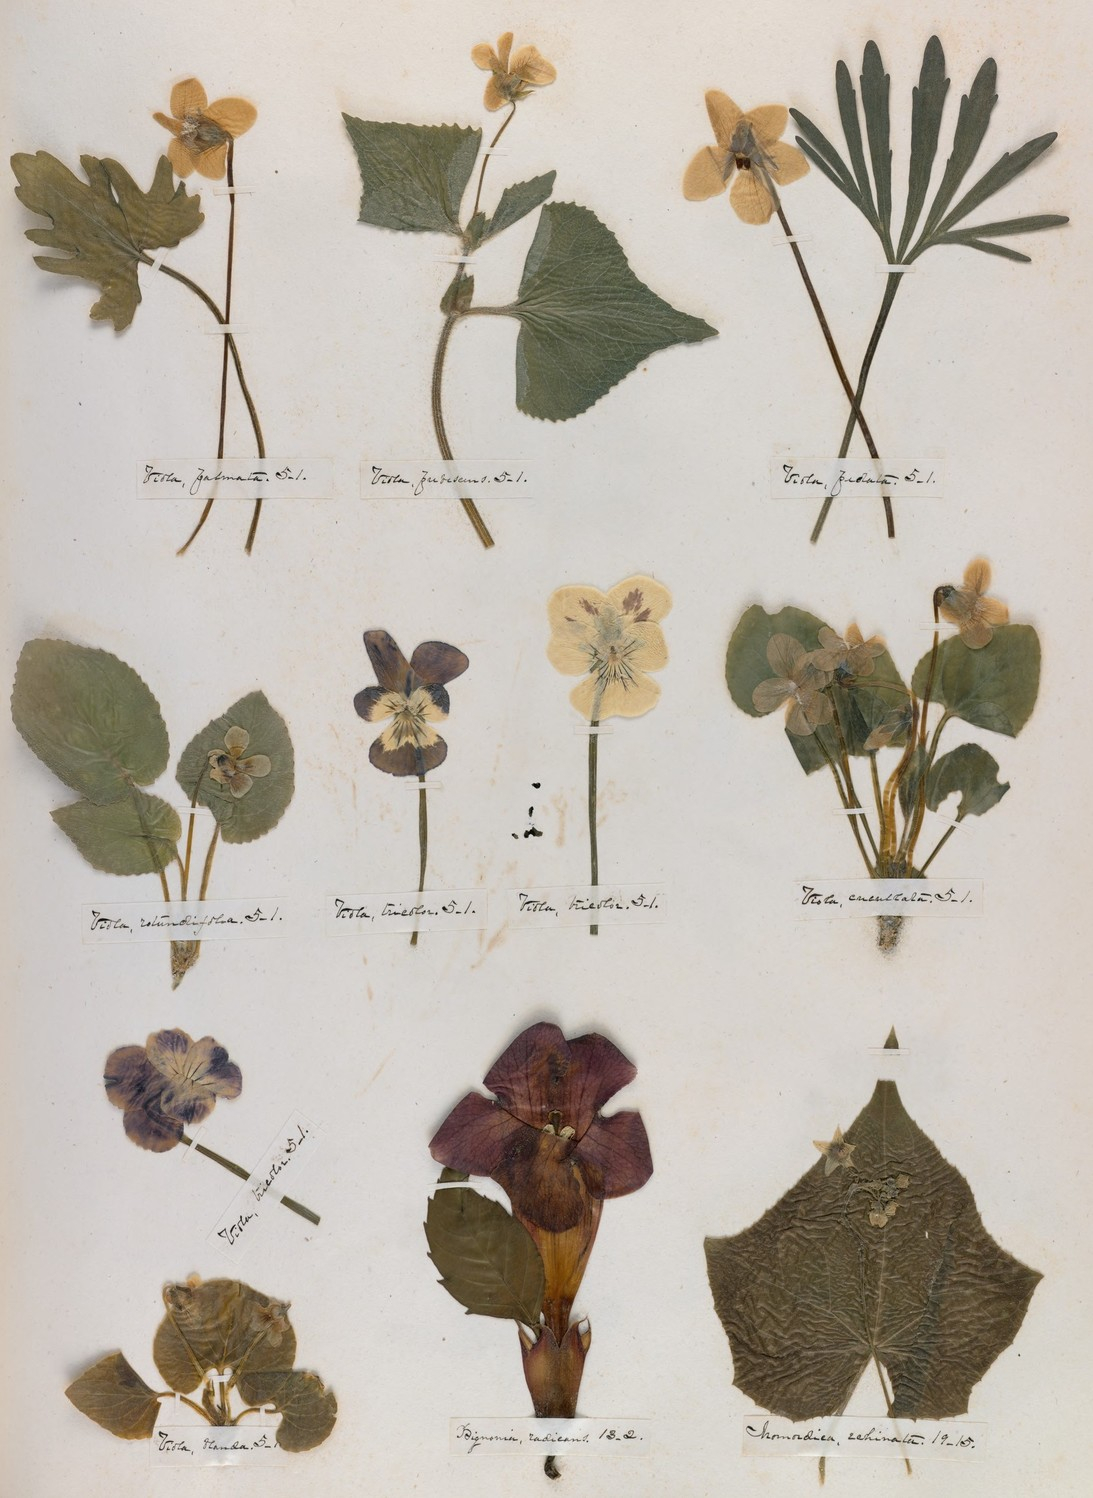 The Emily Dickinson's Herbarium, collections Hughton library - Harvard University